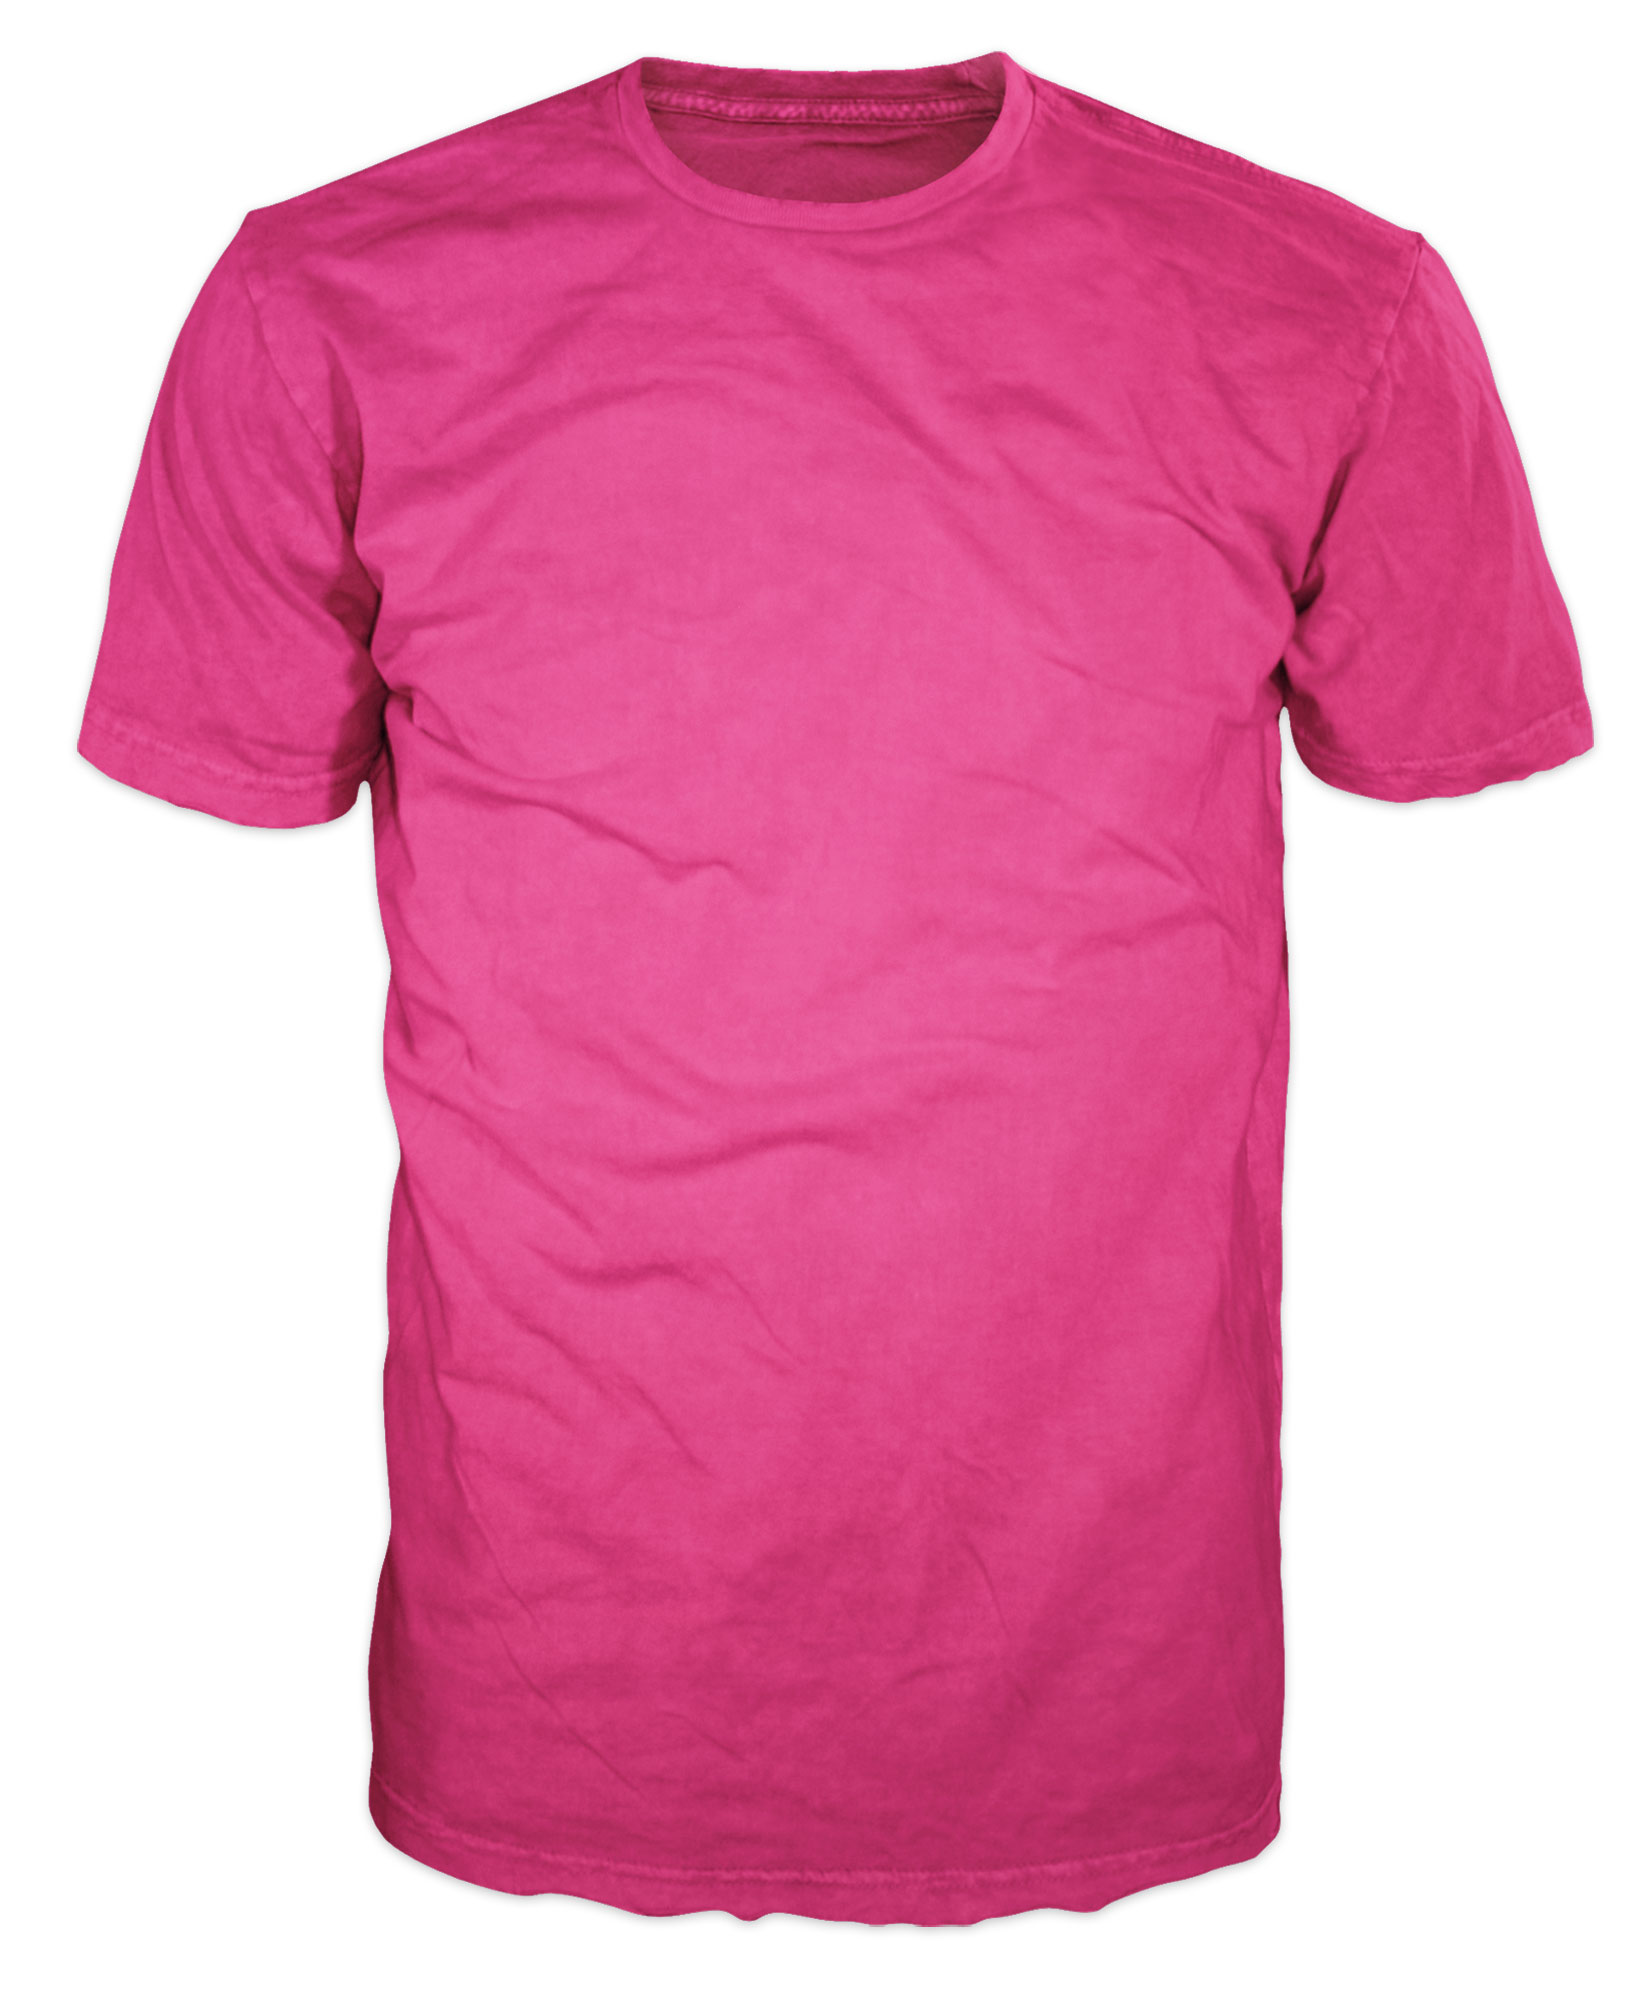 Shirt Color Guide - Reds, Pinks, and Oranges - ClassB® Custom Apparel ...